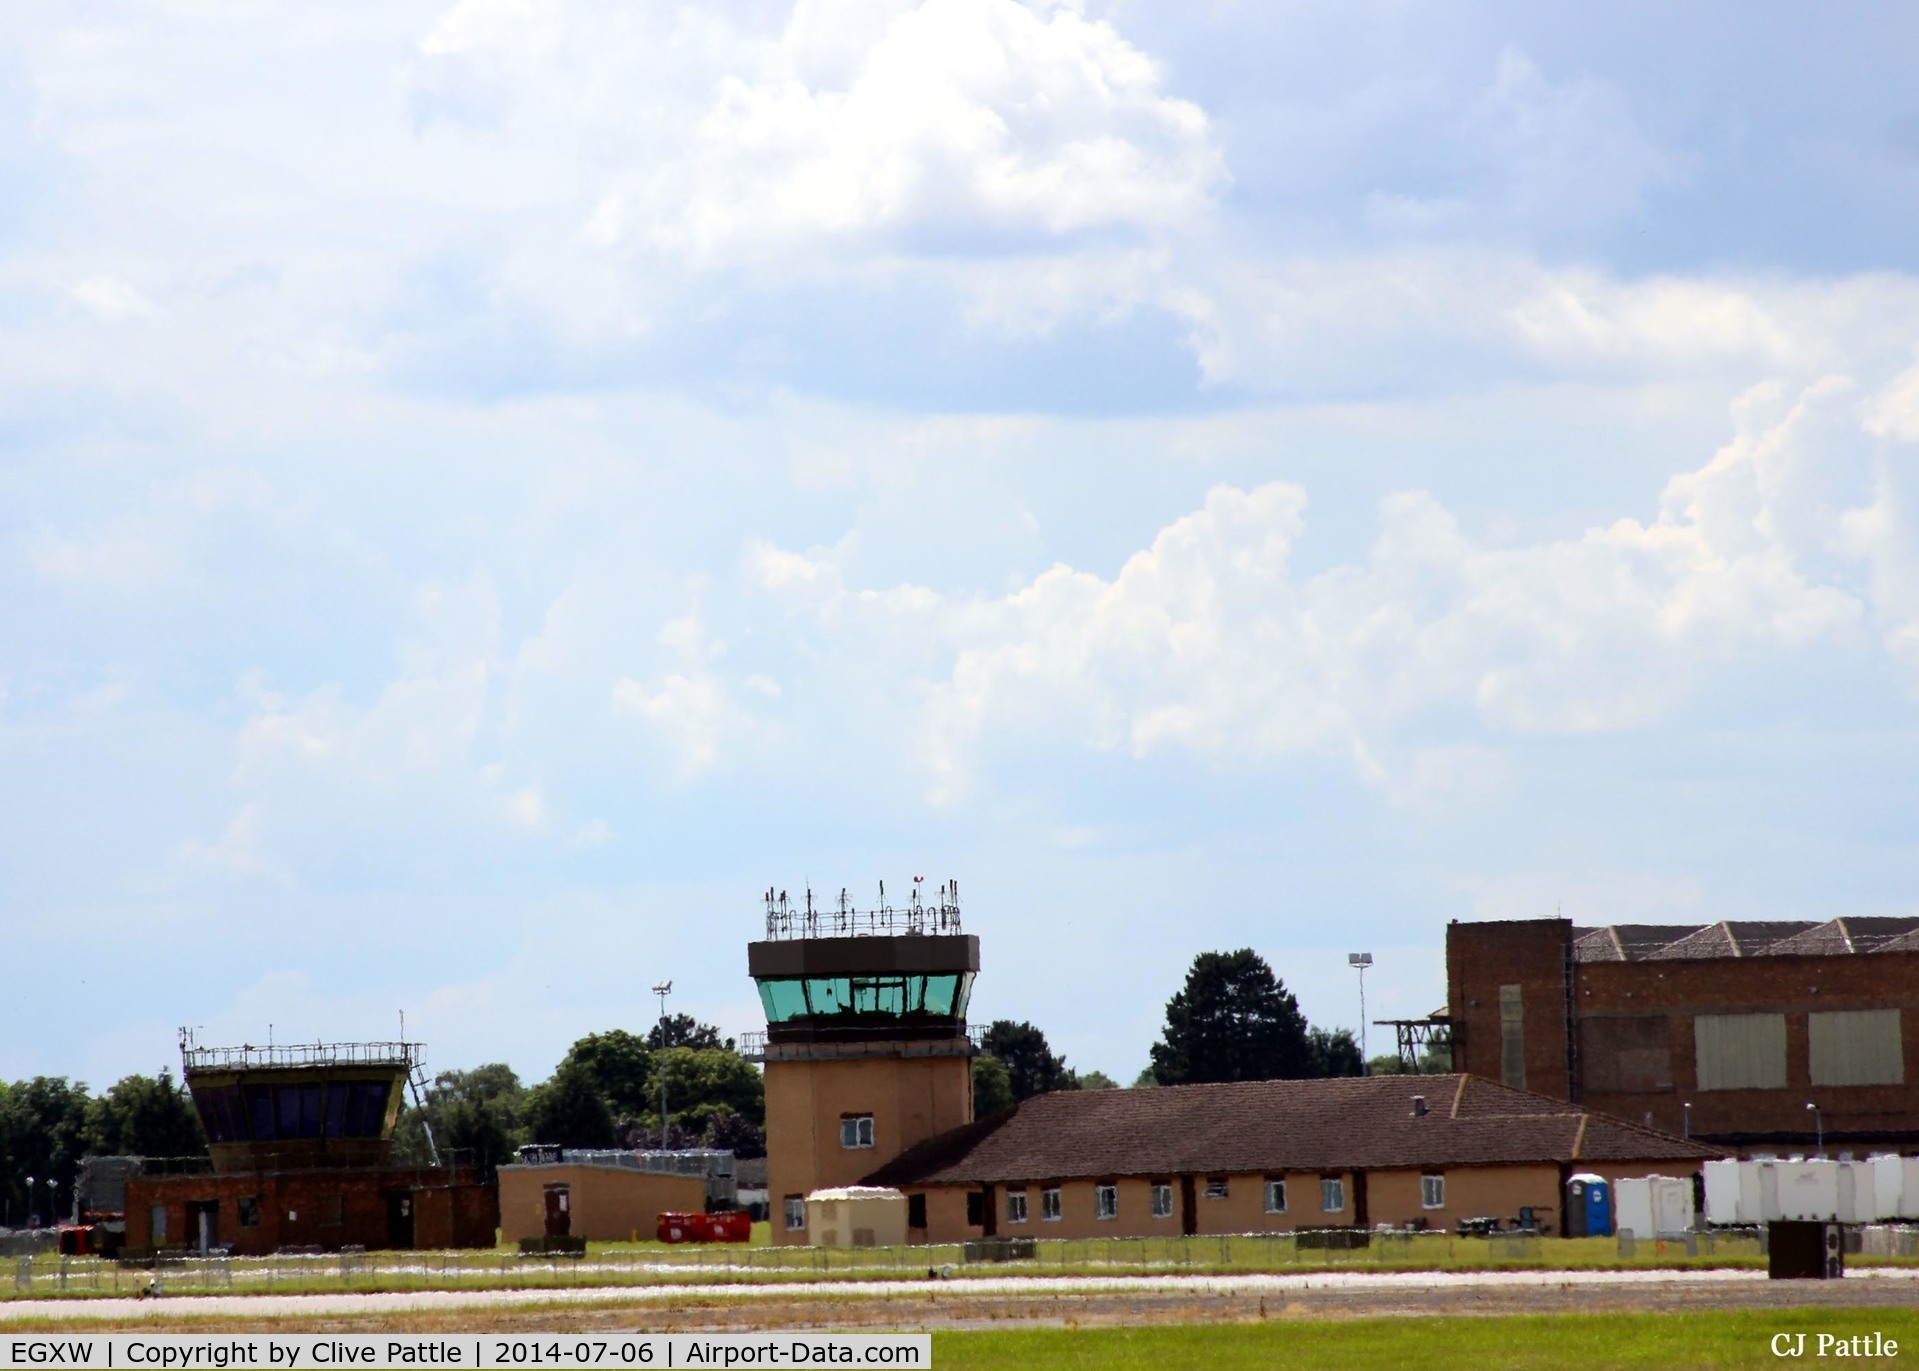 RAF Waddington Airport, Waddington, England United Kingdom (EGXW) - The old and the new towers at RAF Waddington